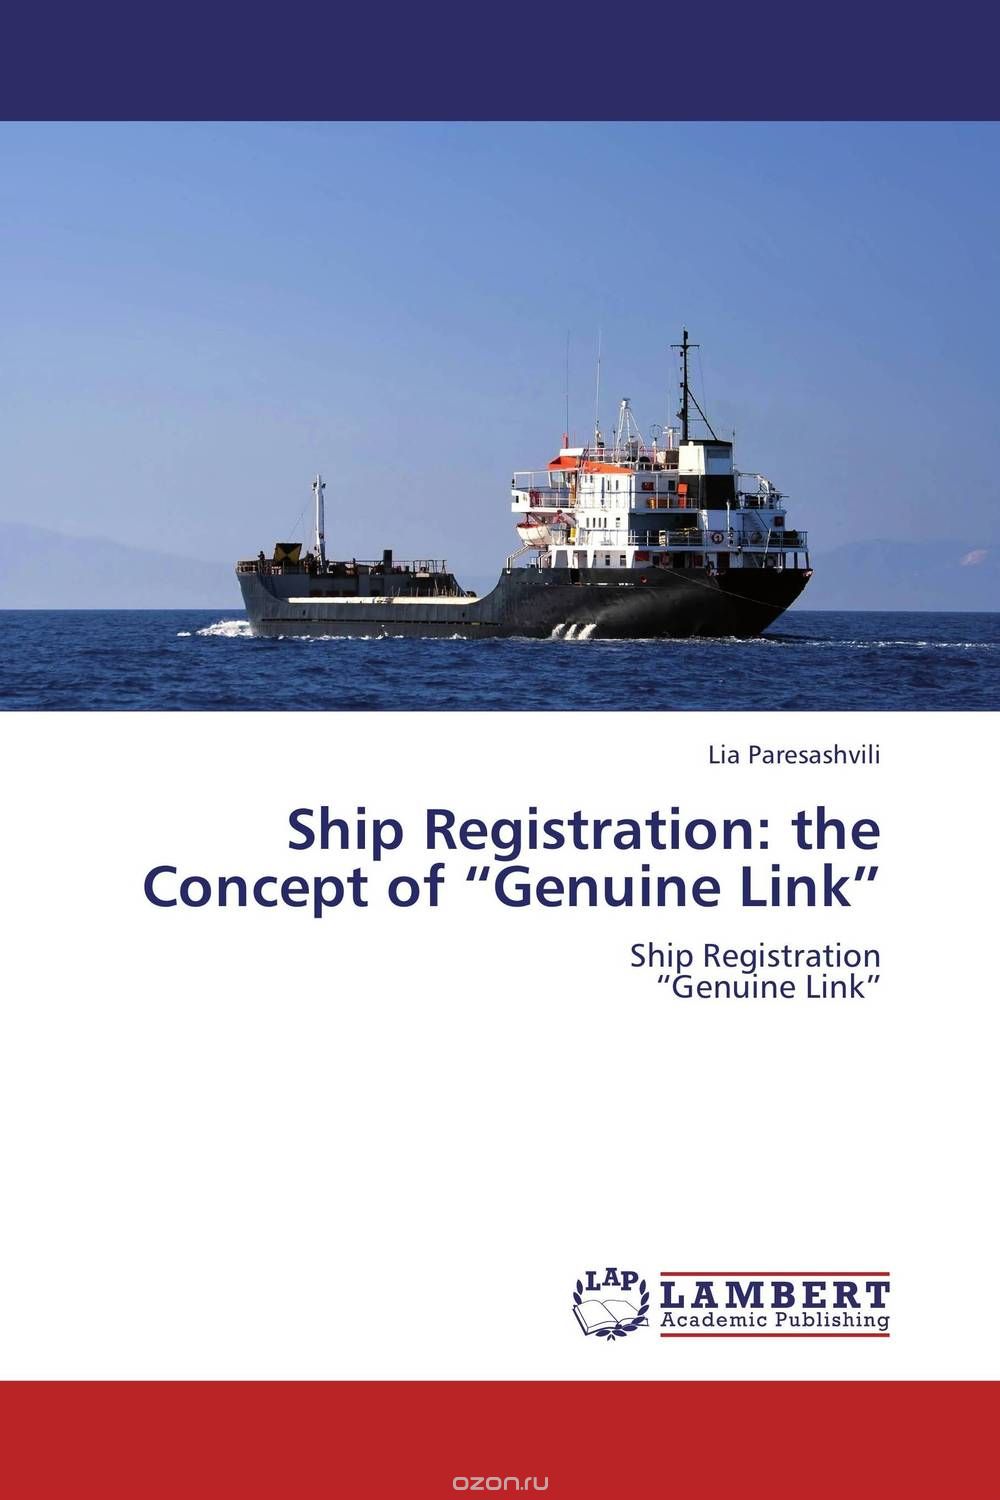 Ship Registration: the Concept of “Genuine Link”